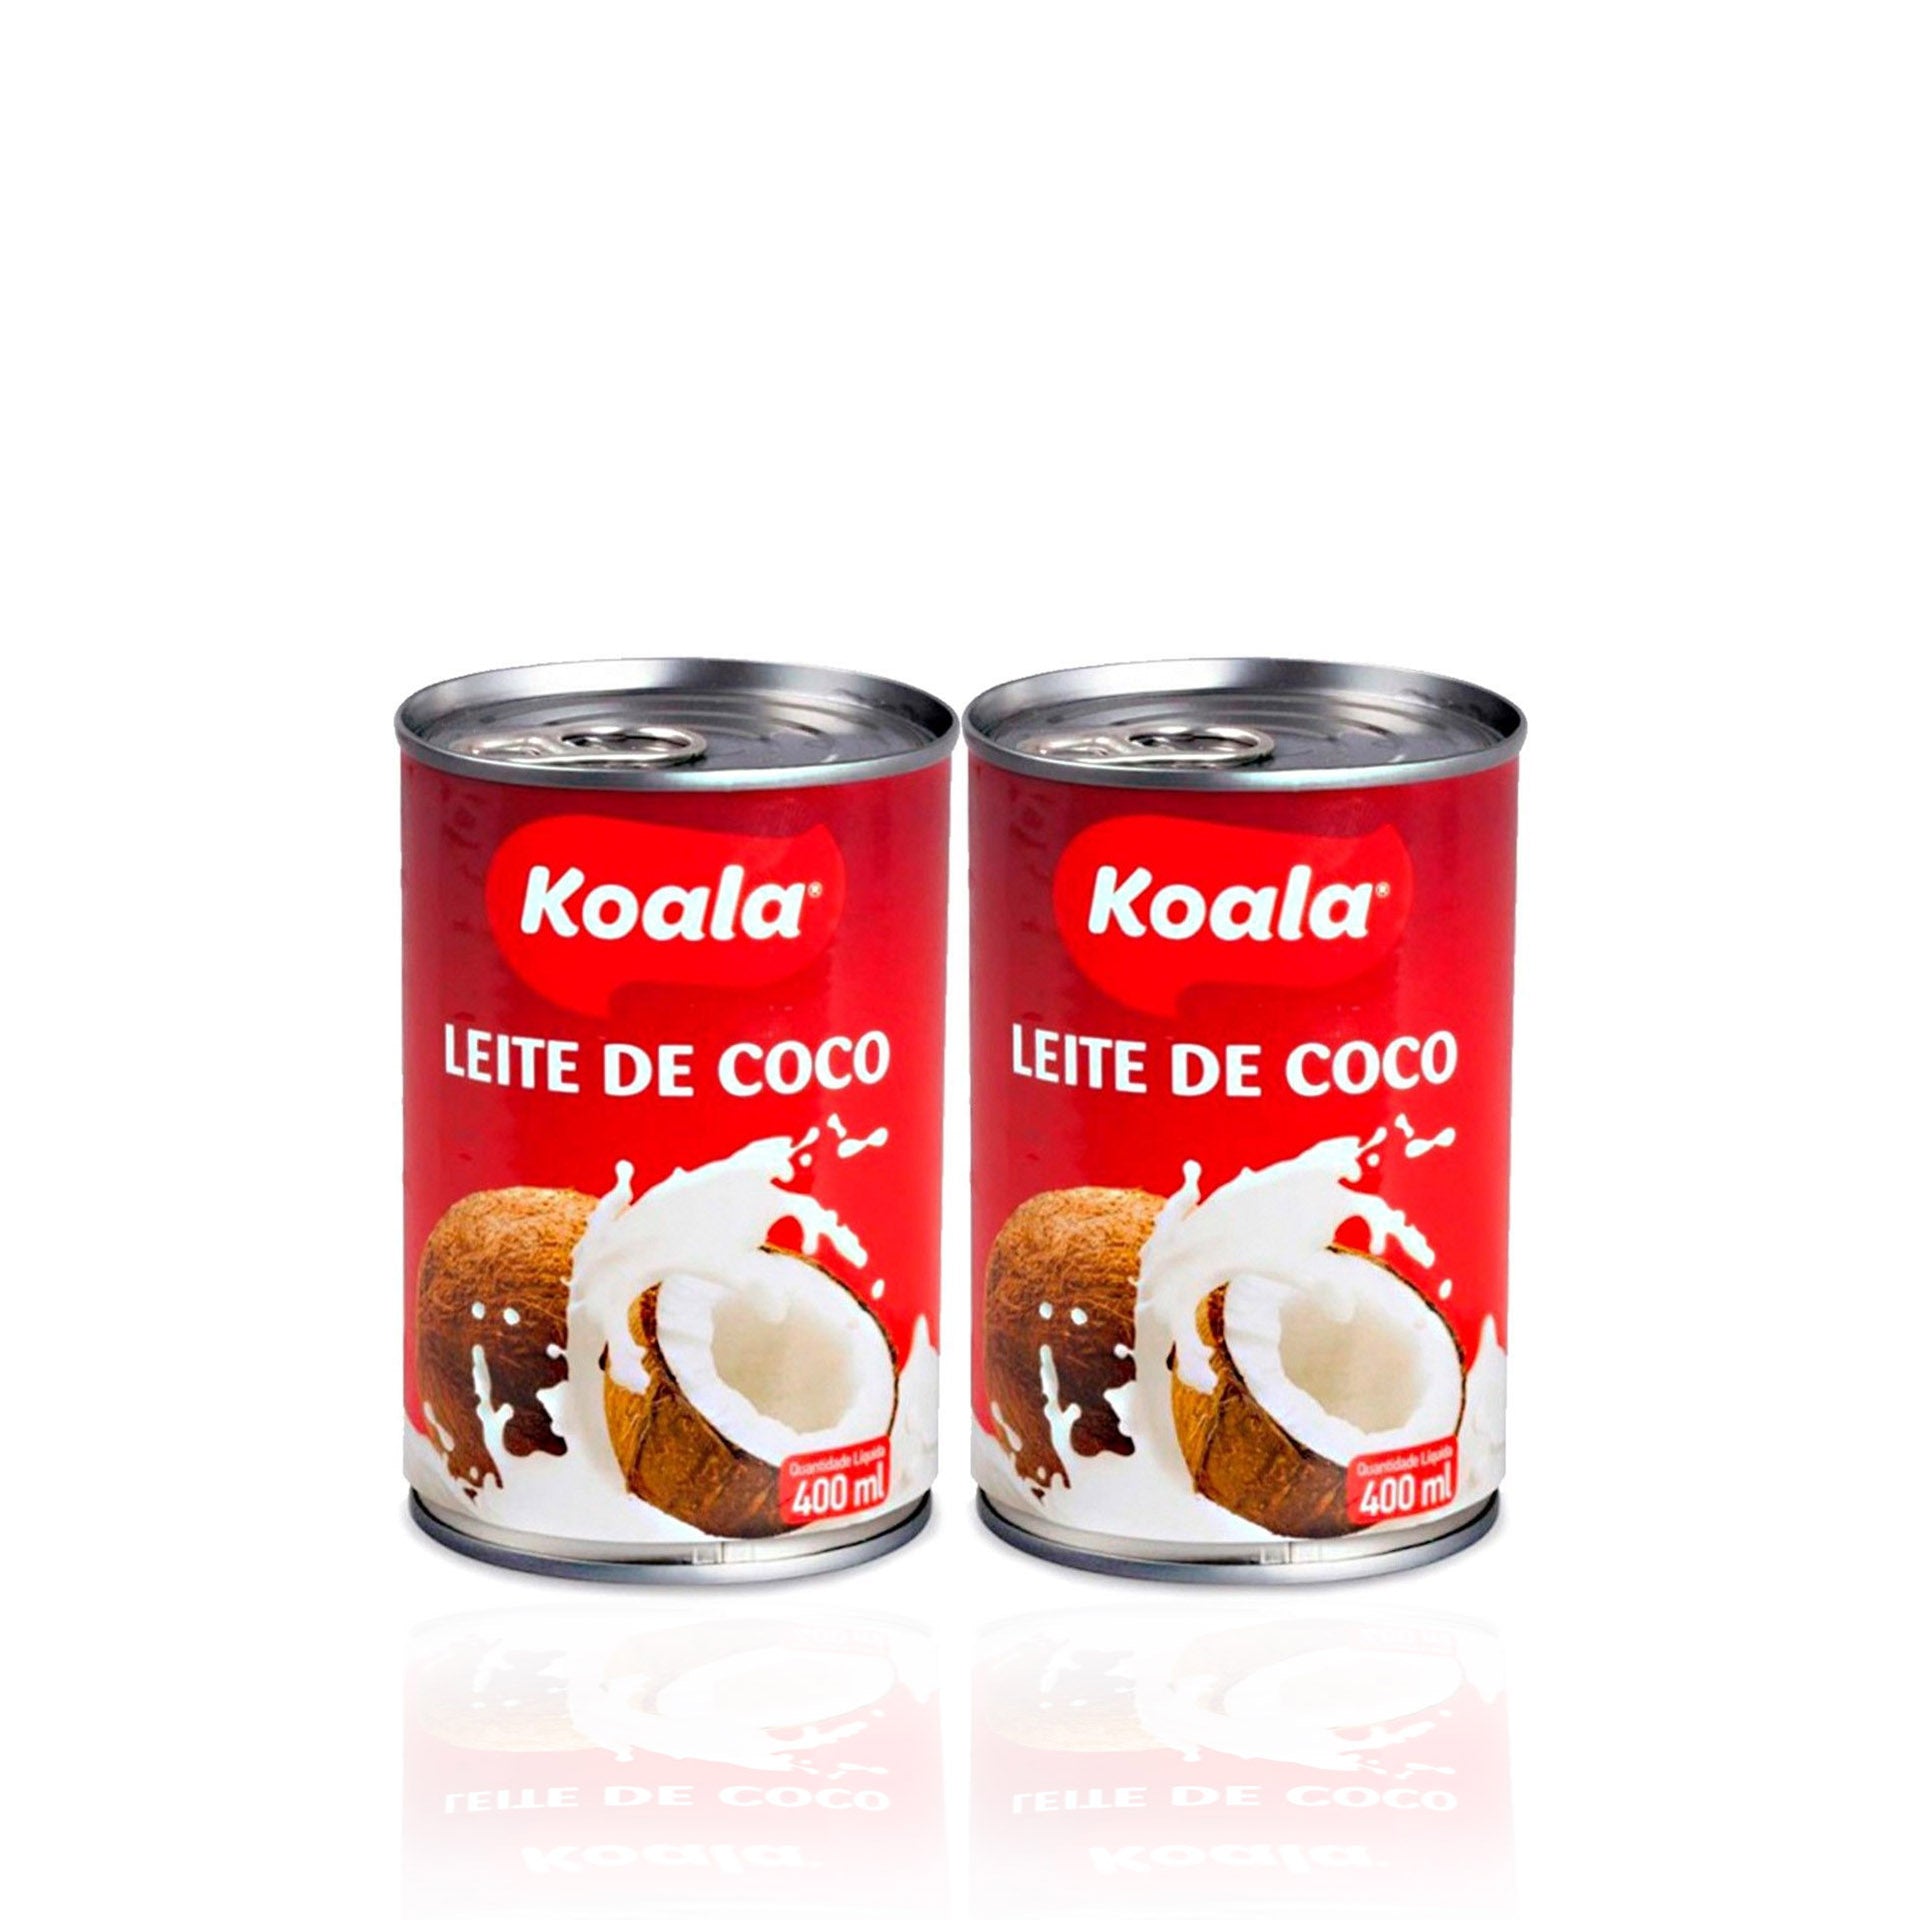 Koala Leite de Côco 400 ml - Pack 2 x 400 ml